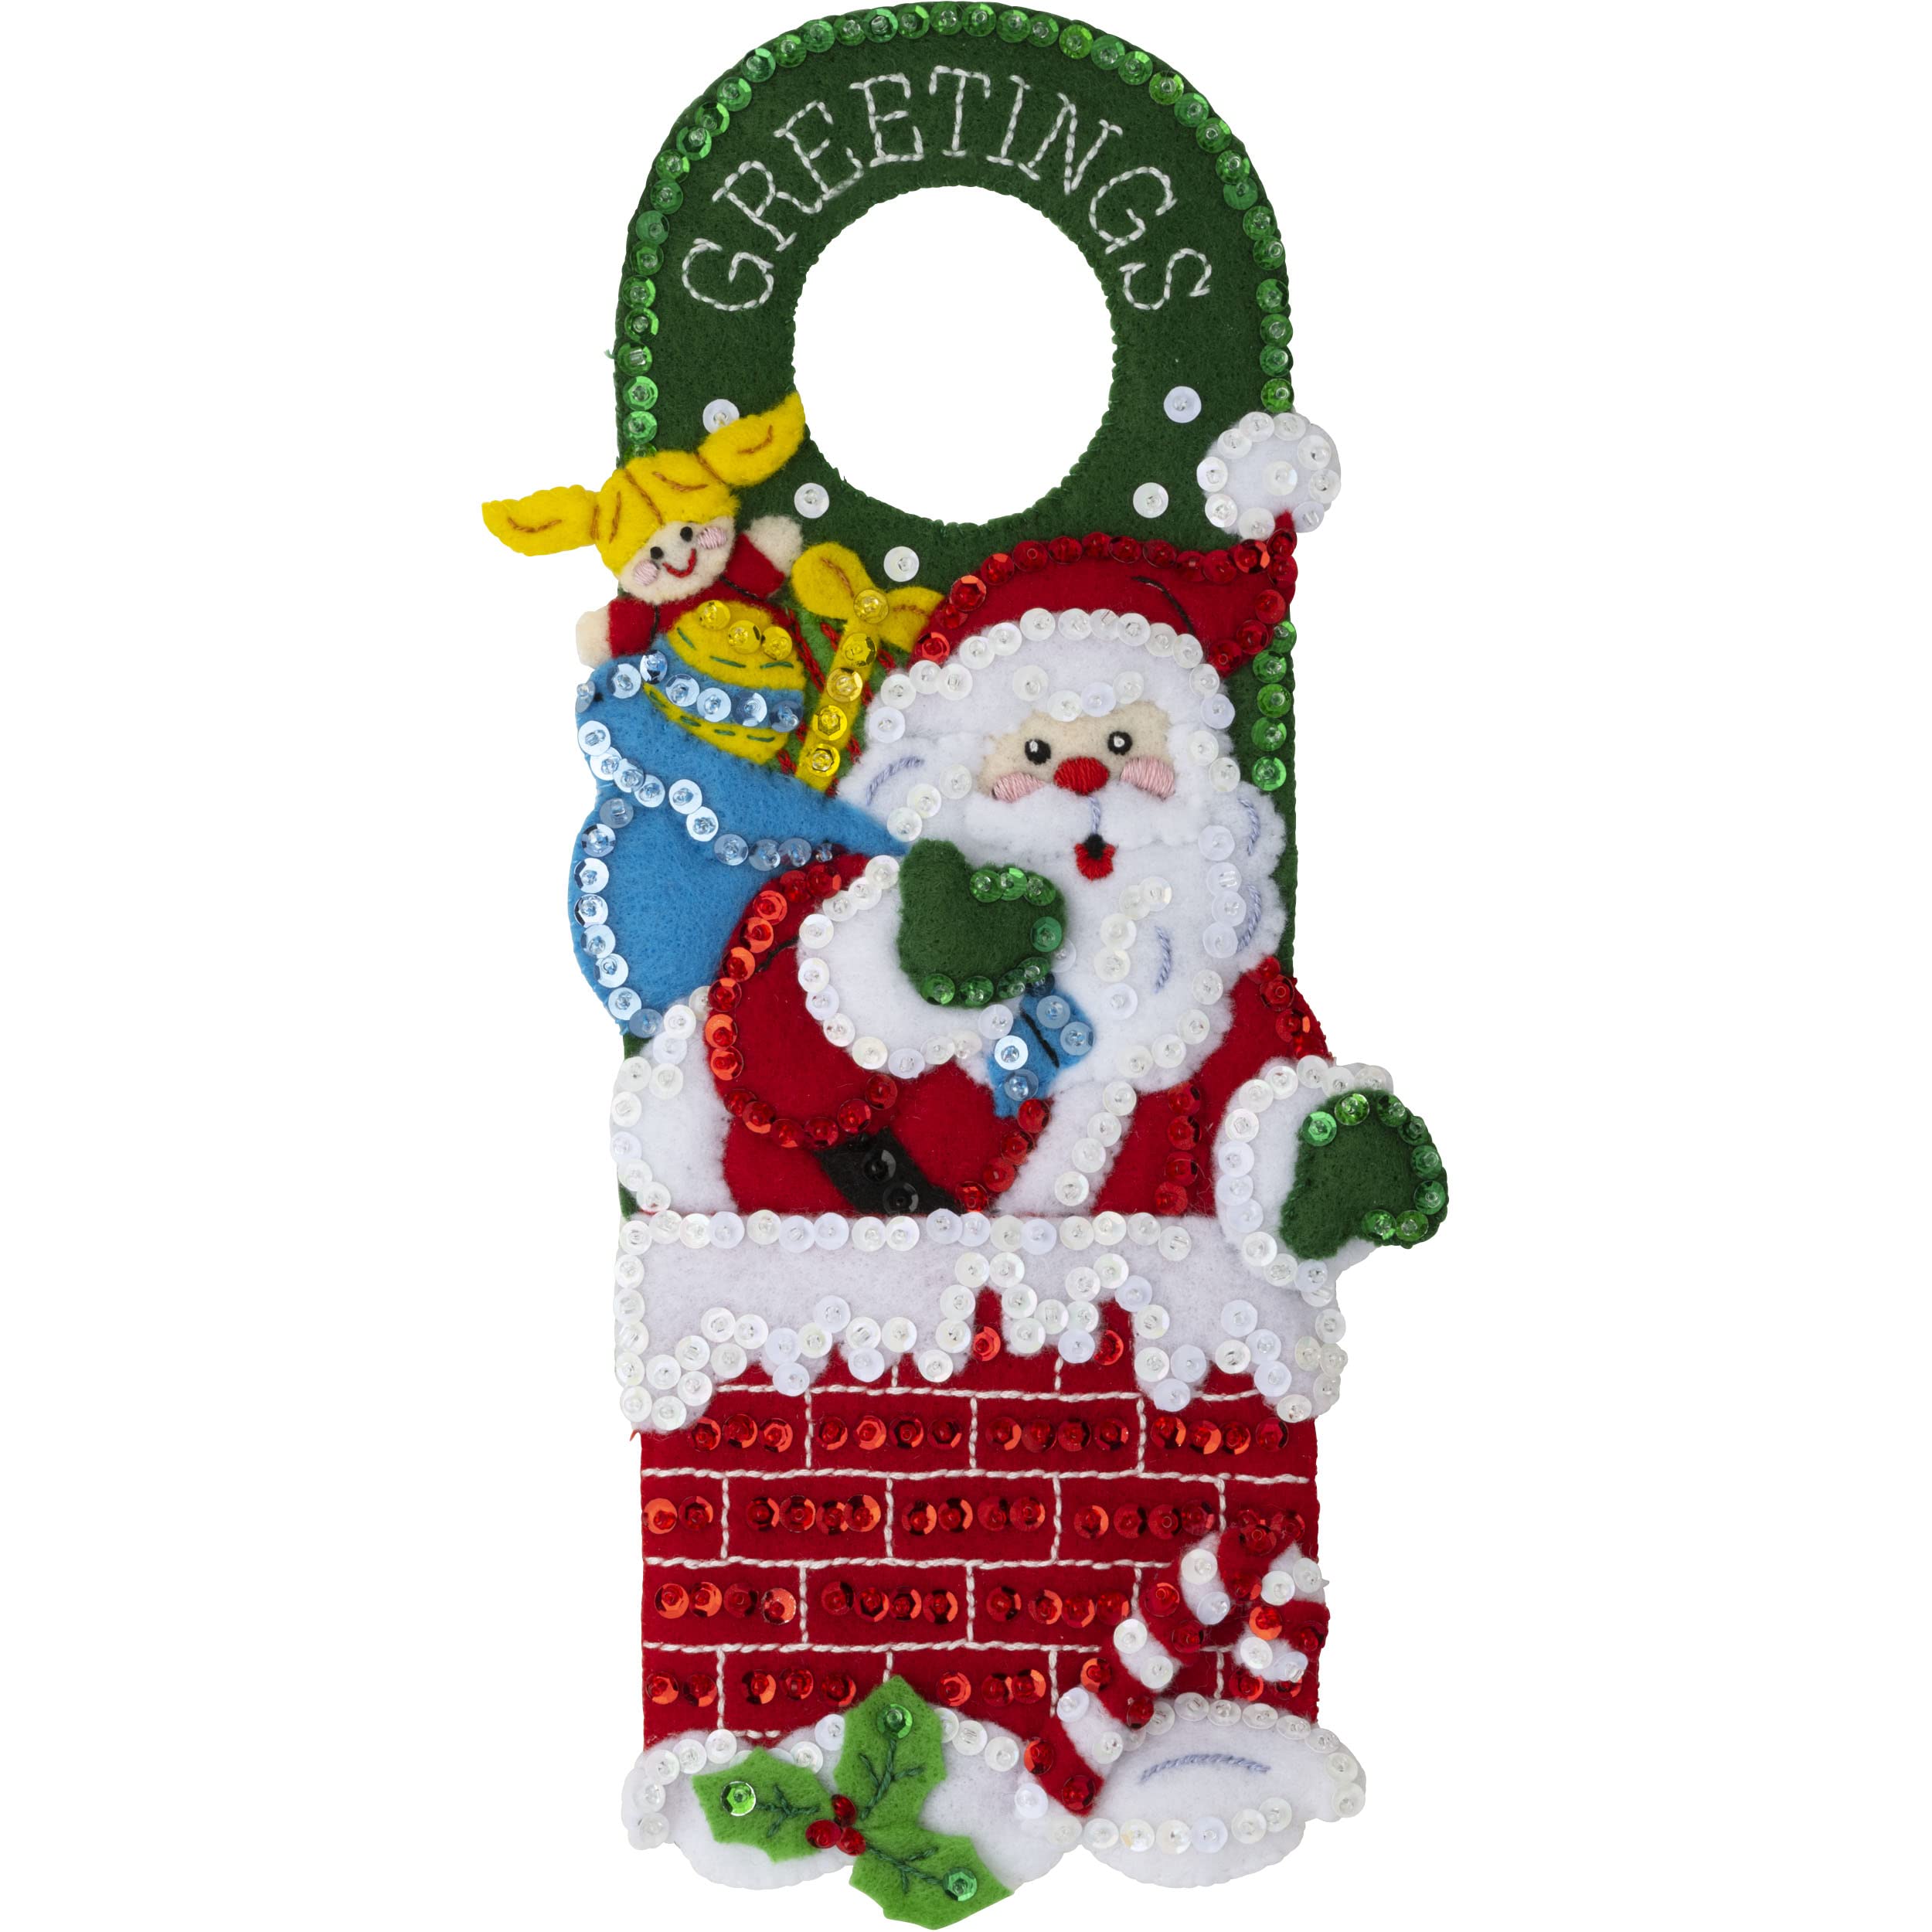 Bucilla, Holiday Christmas Set of 2 Felt Applique Door Hanger Making Kit, Supplies for DIY Needlepoint Arts and Crafts, 89471E